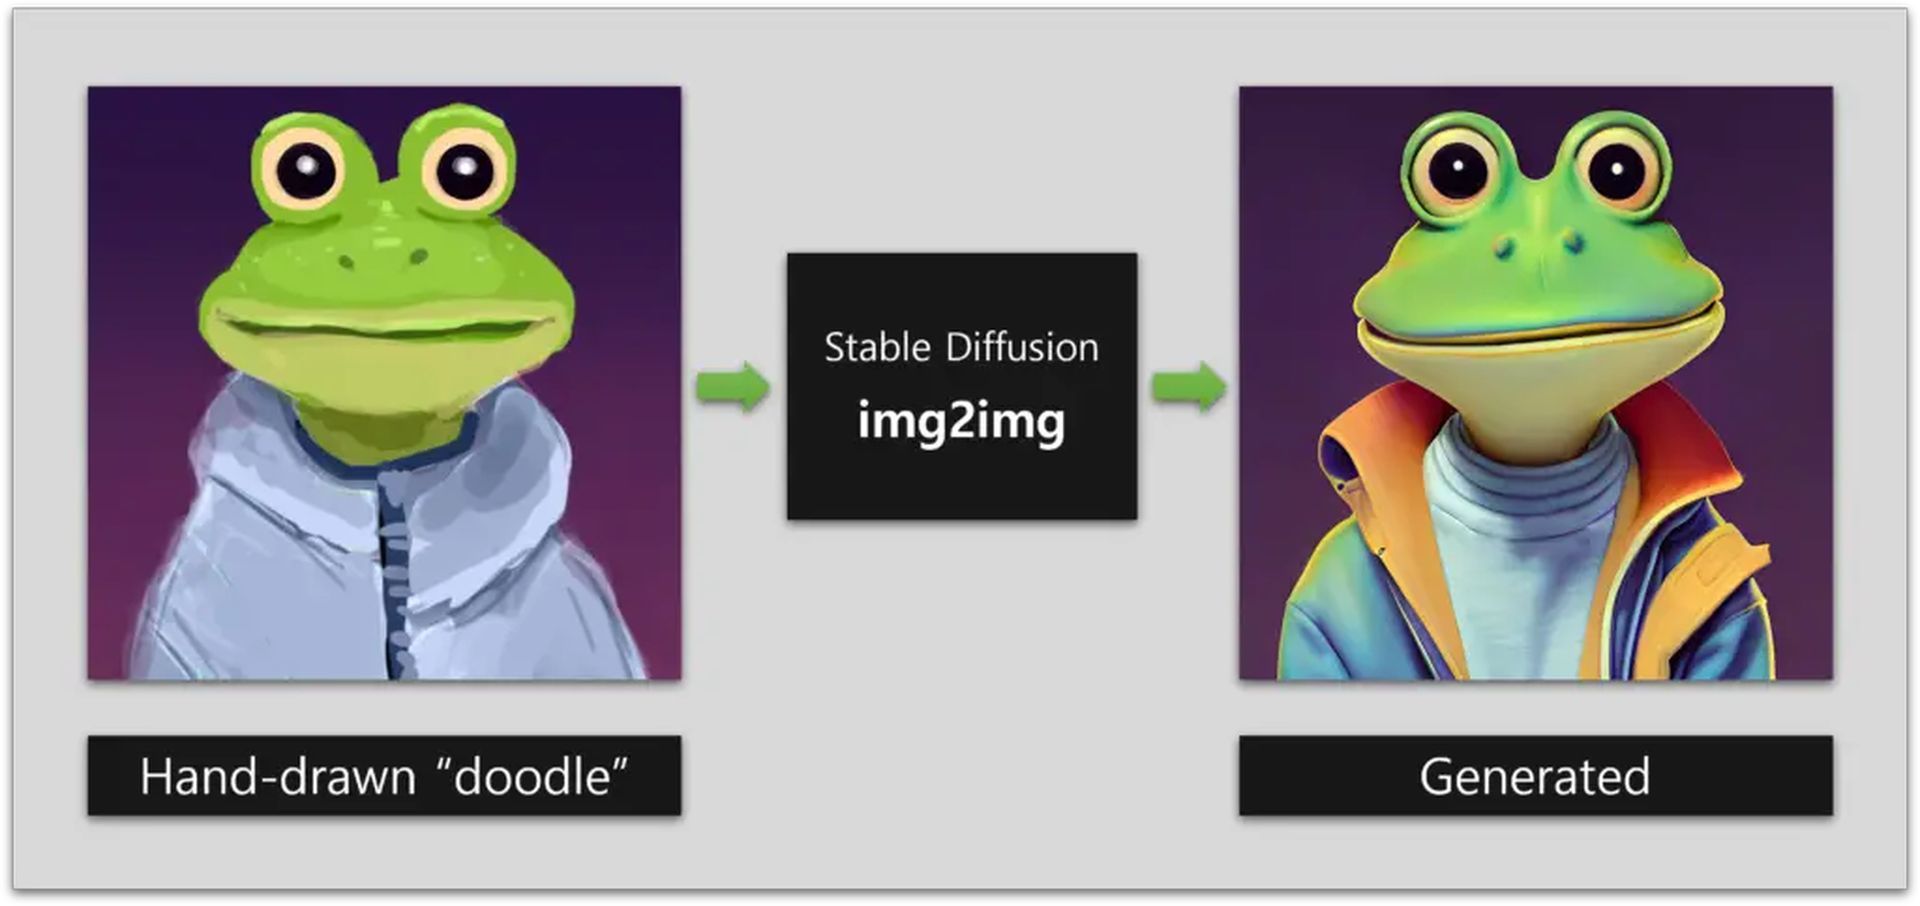 Img2Img: Stable Diffusion Image-to-Image